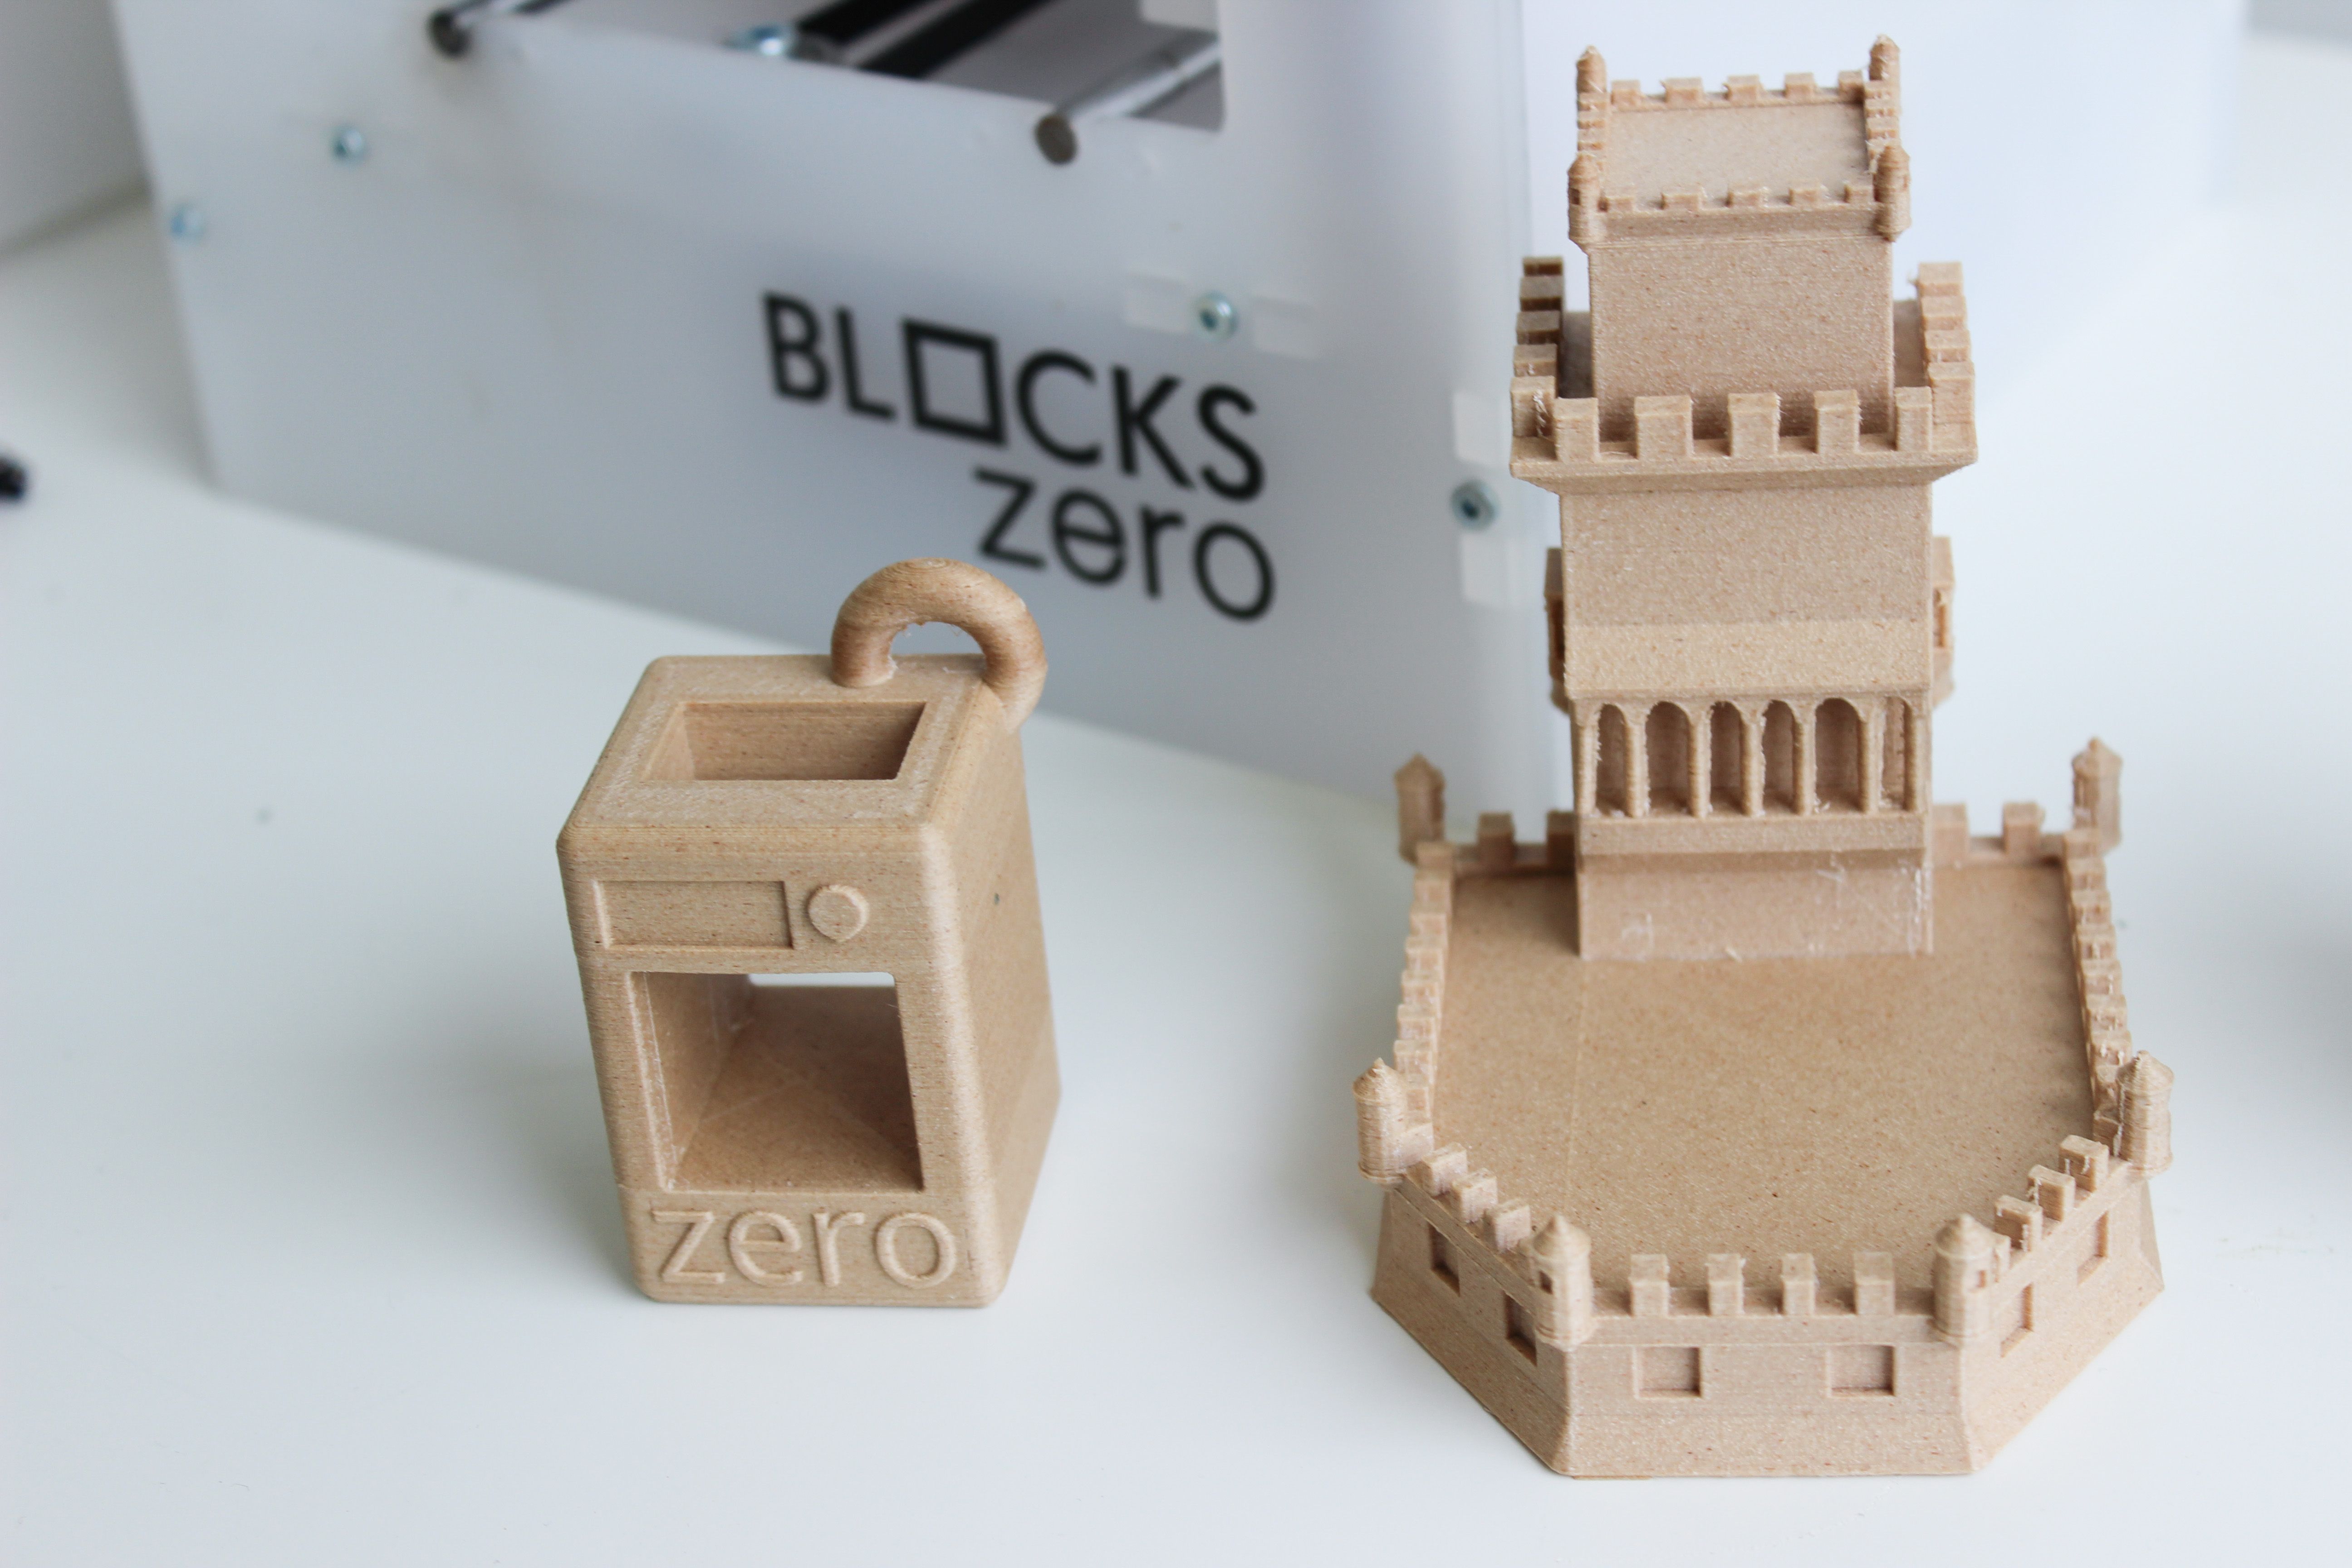 Blocks Zero